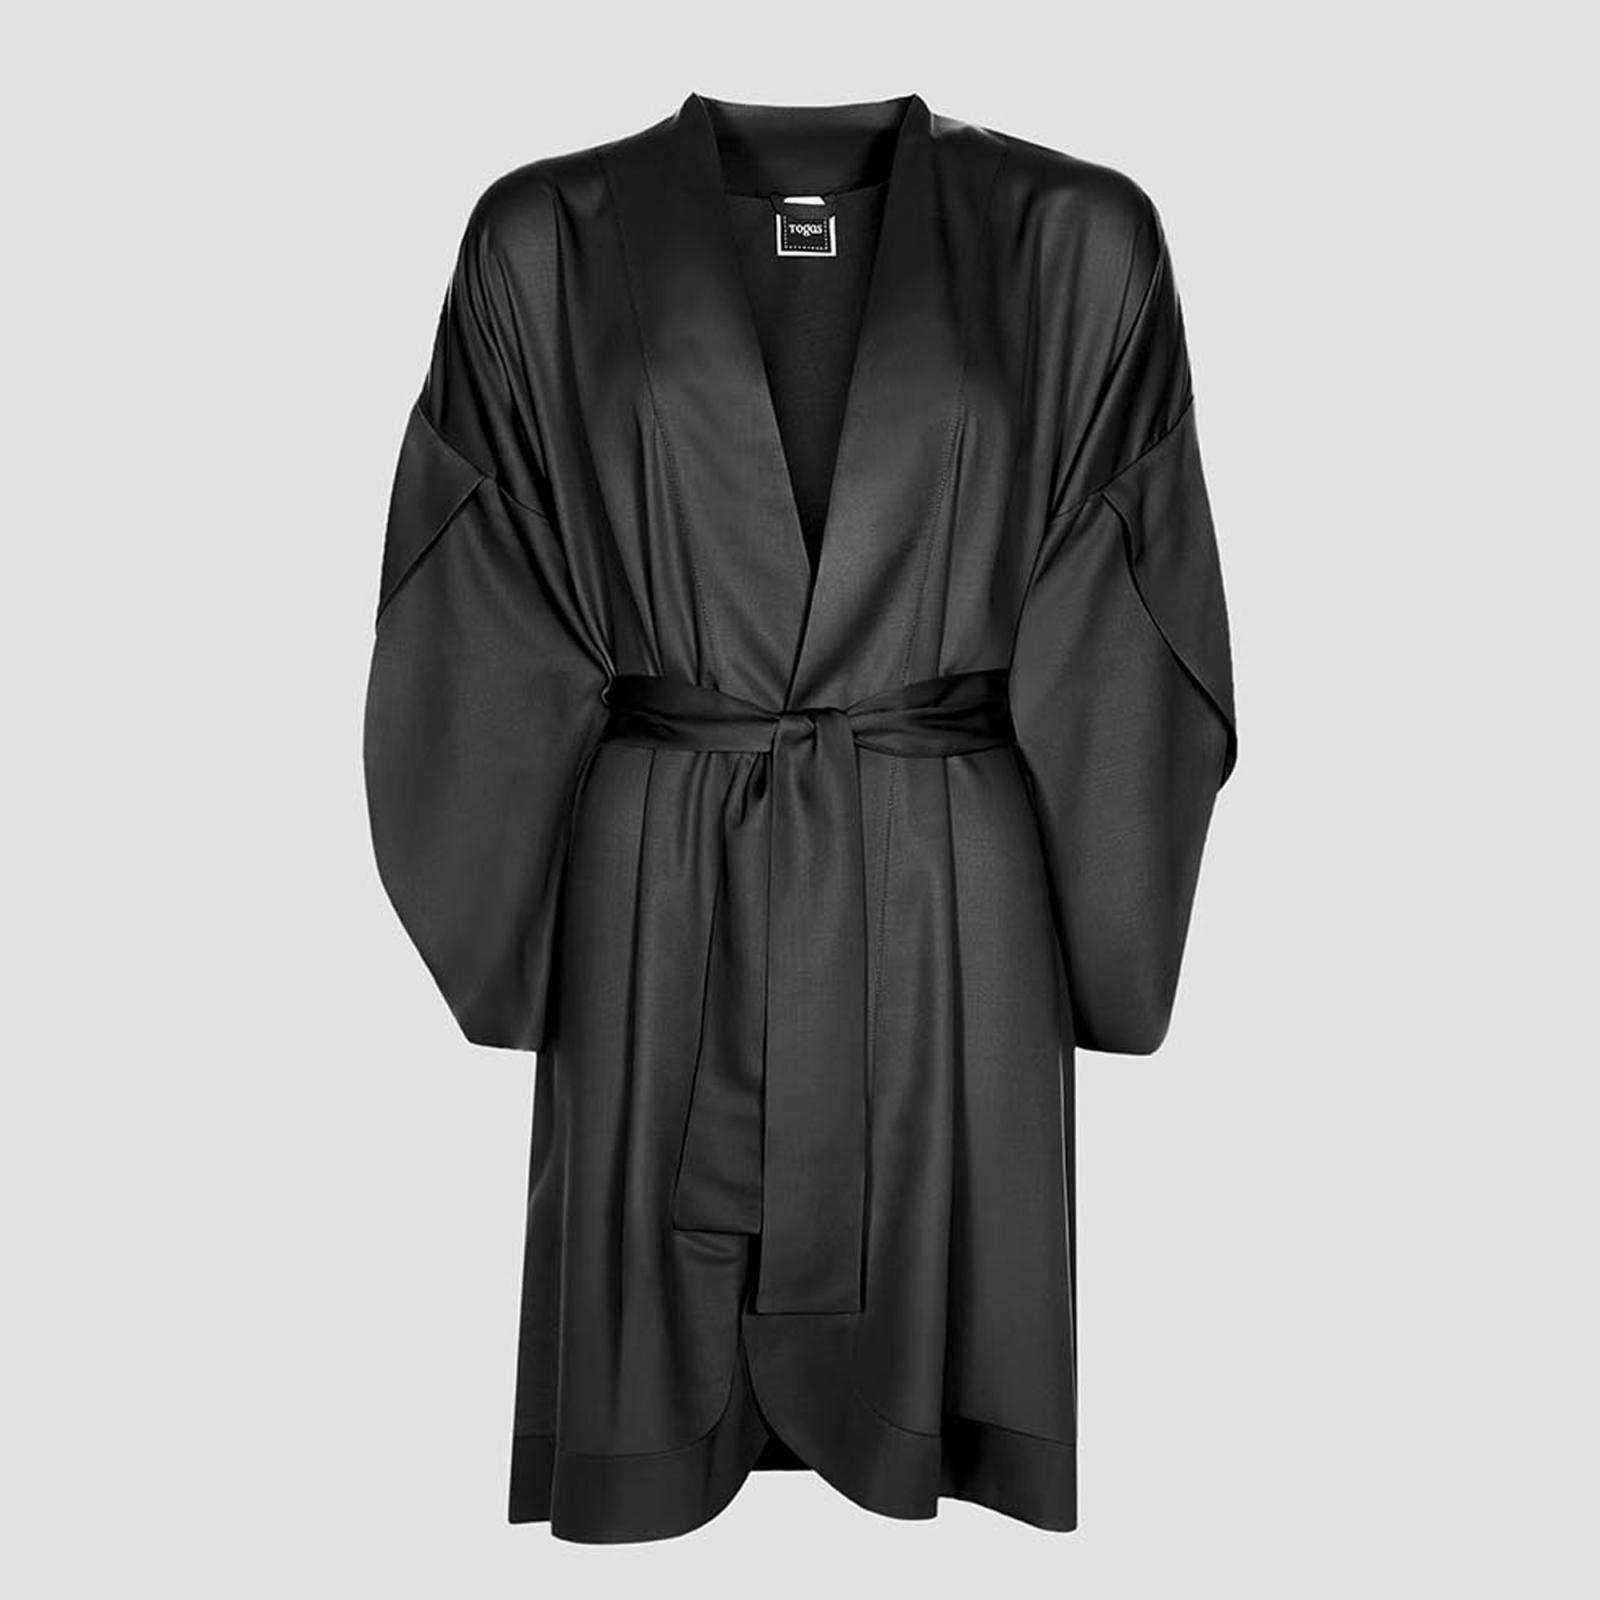 Халат-кимоно короткое Togas Наоми чёрное XXL (52) халат кимоно togas наоми розовый xxl 52